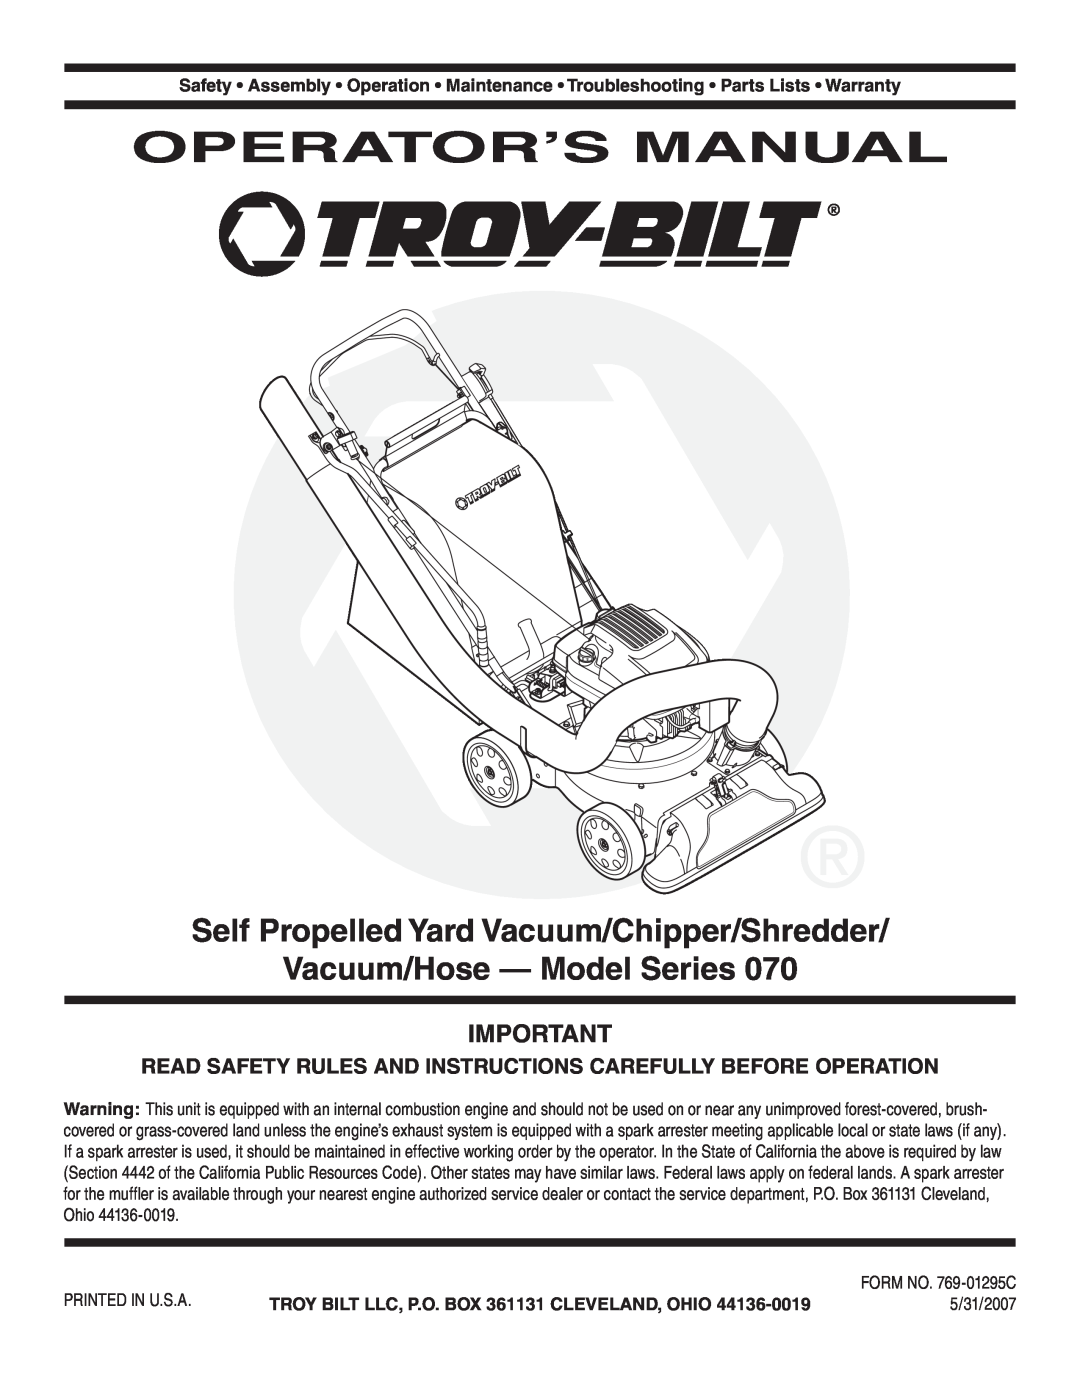 Troy-Bilt 70 warranty Operator’S Manual, Self Propelled Yard Vacuum/Chipper/Shredder, Vacuum/Hose - Model Series 